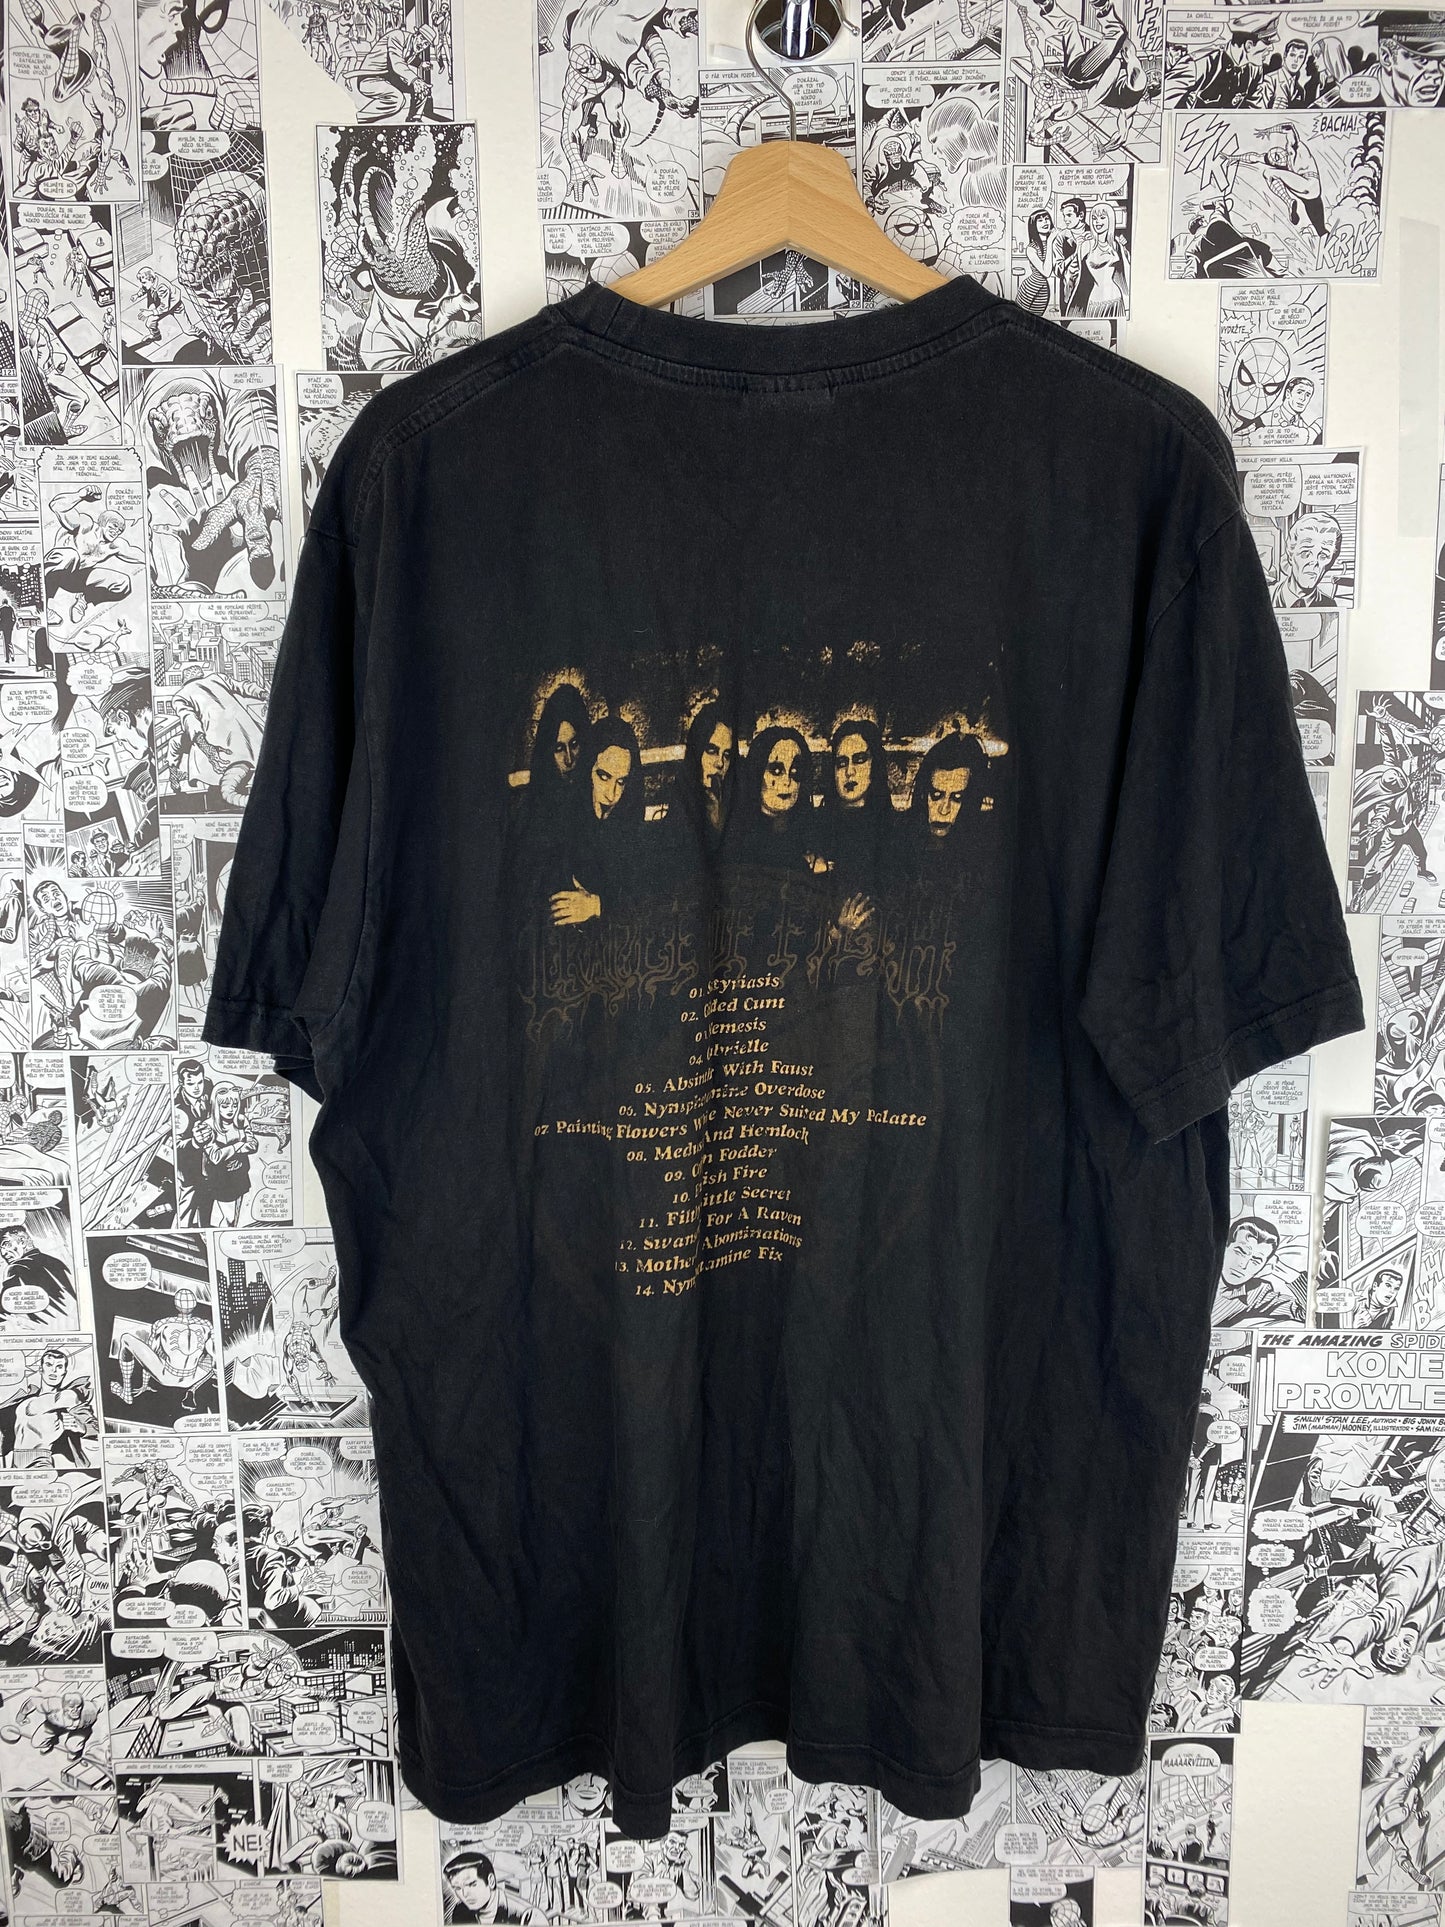 Vintage Cradle of Filth “Nymphetamine” tour t-shirt - size XXL